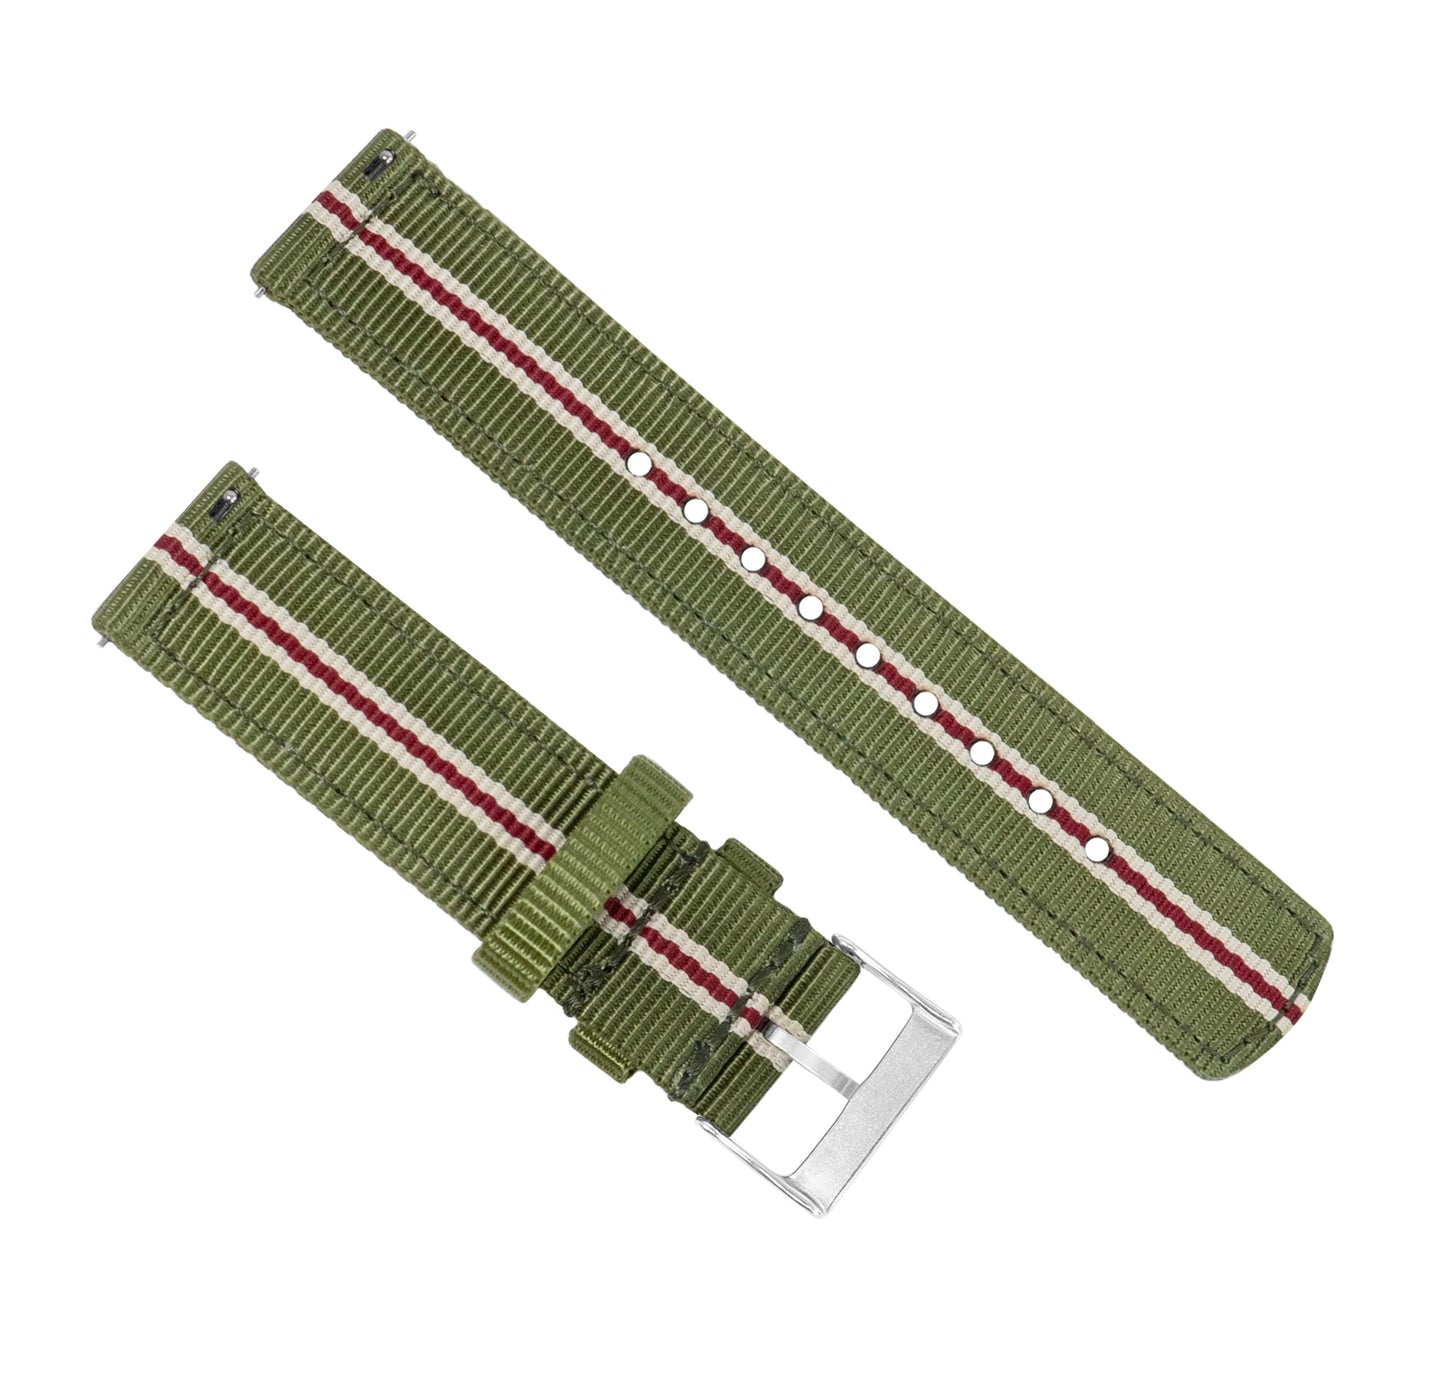 Samsung Galaxy Watch3 | Two-Piece NATO Style | Army Green & Crimson - Barton Watch Bands